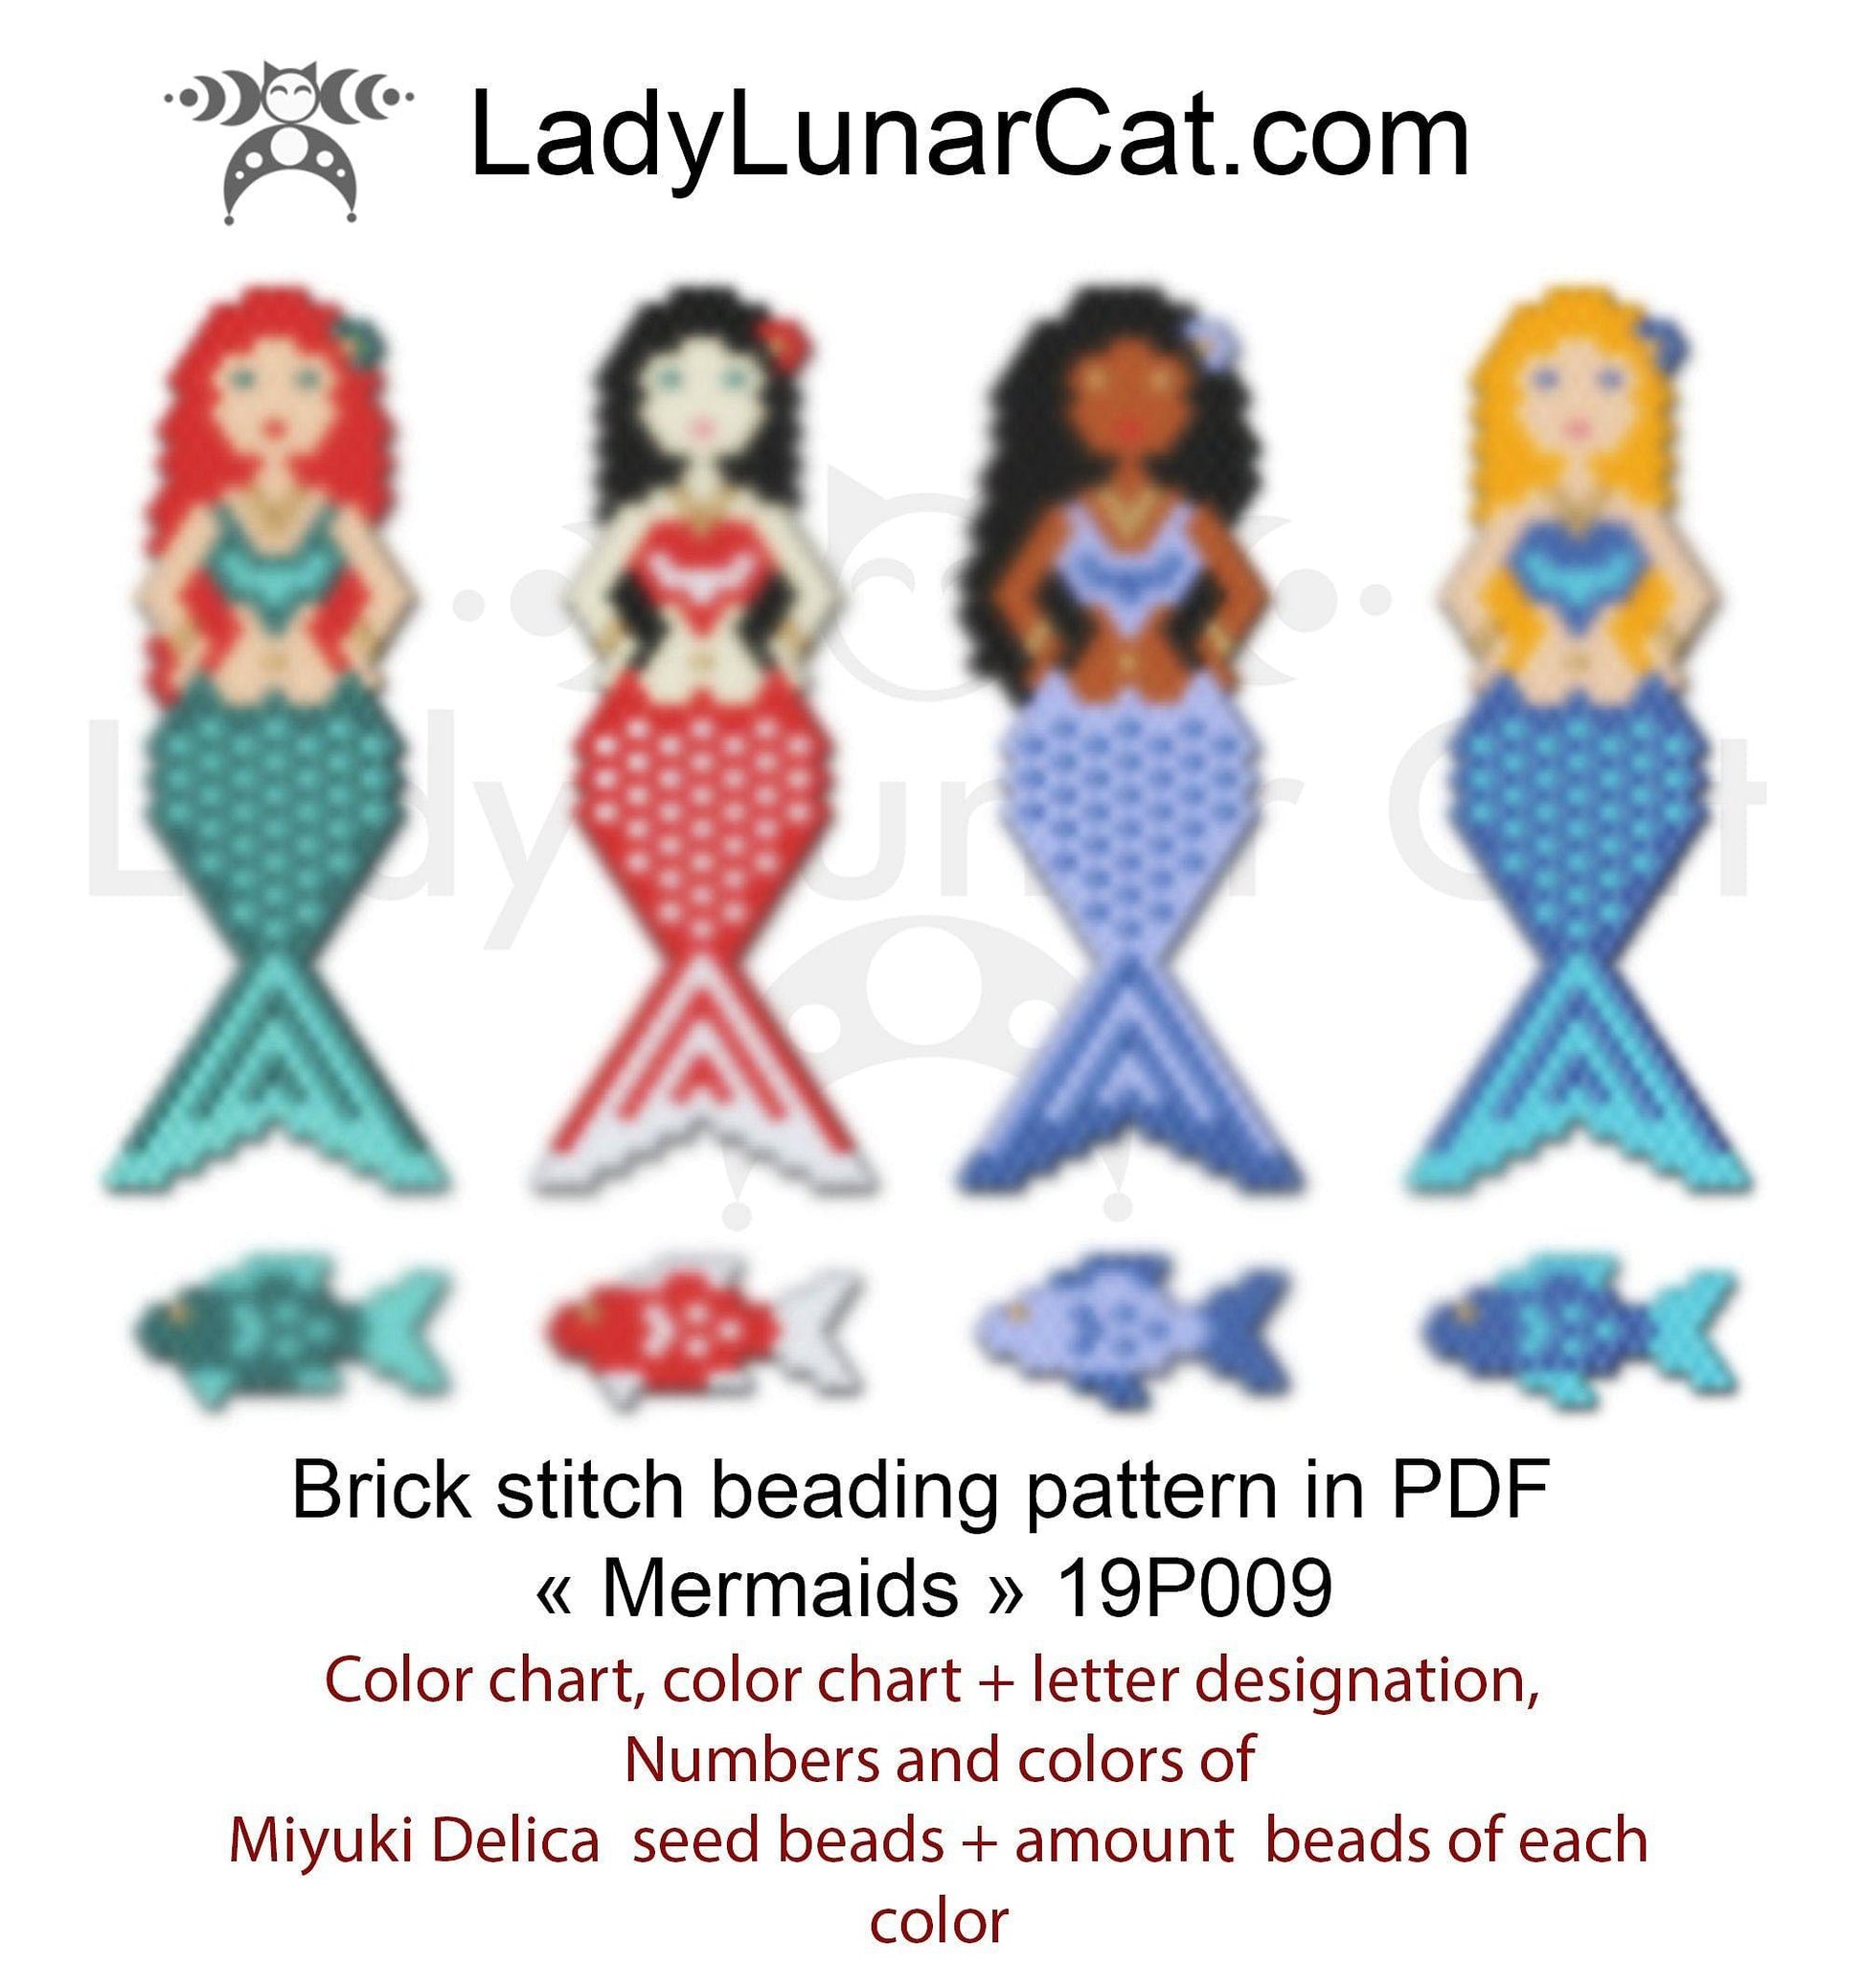 Mermaids brick stitch beading pattern in PDF download LadyLunarCat